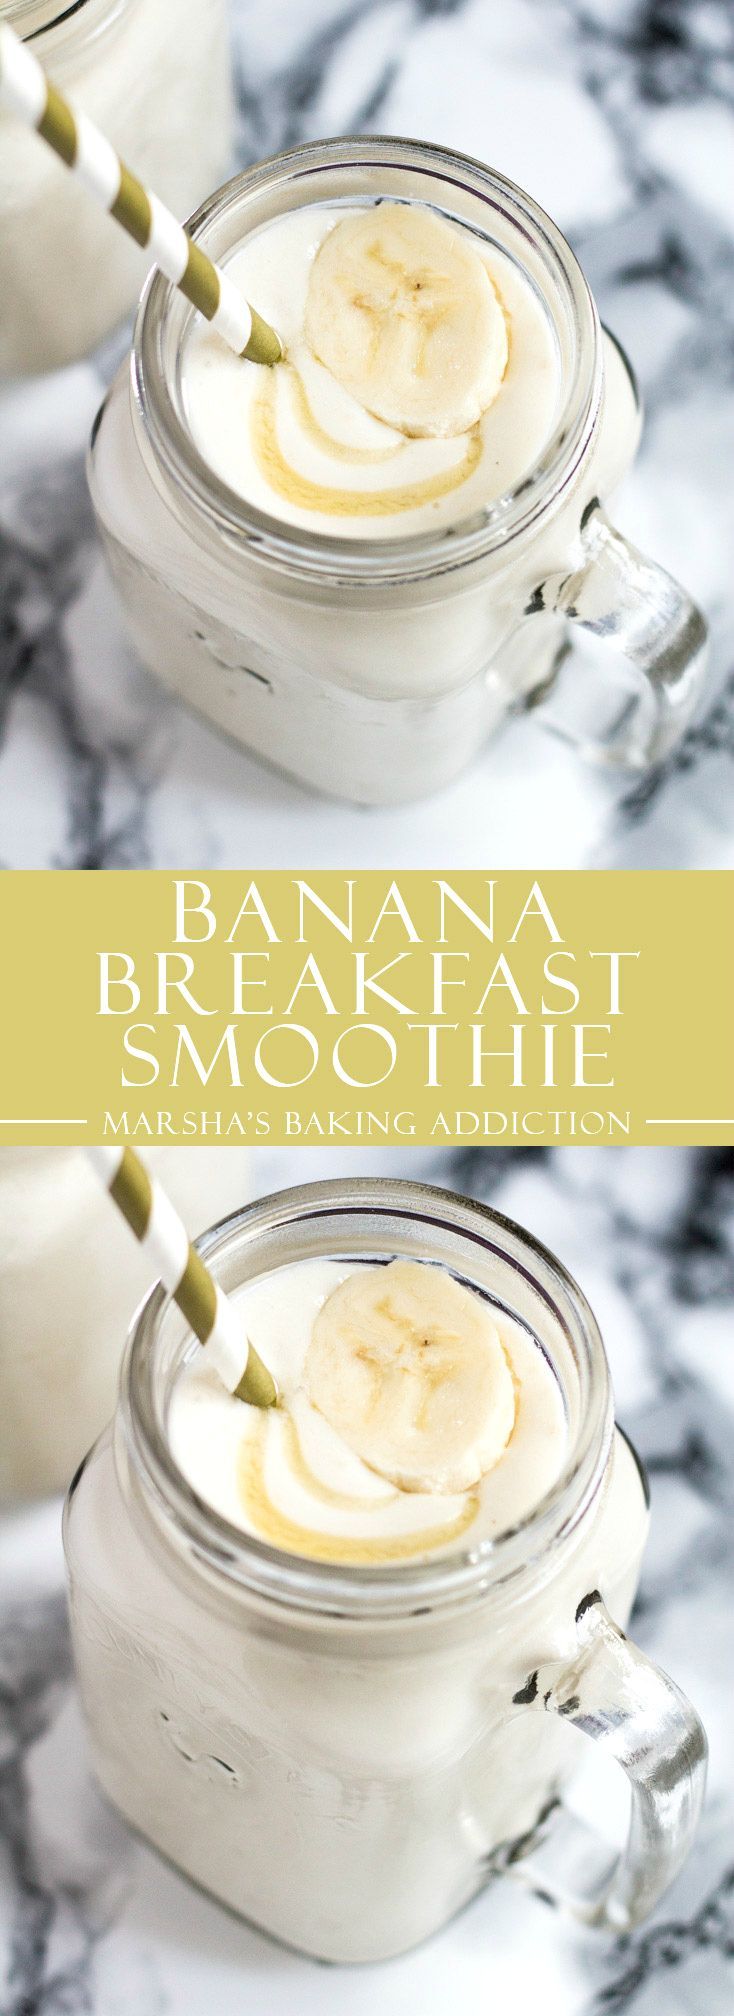 Banana Breakfast Smoothie | marshasbakingaddiction.com @marshasbakeblog